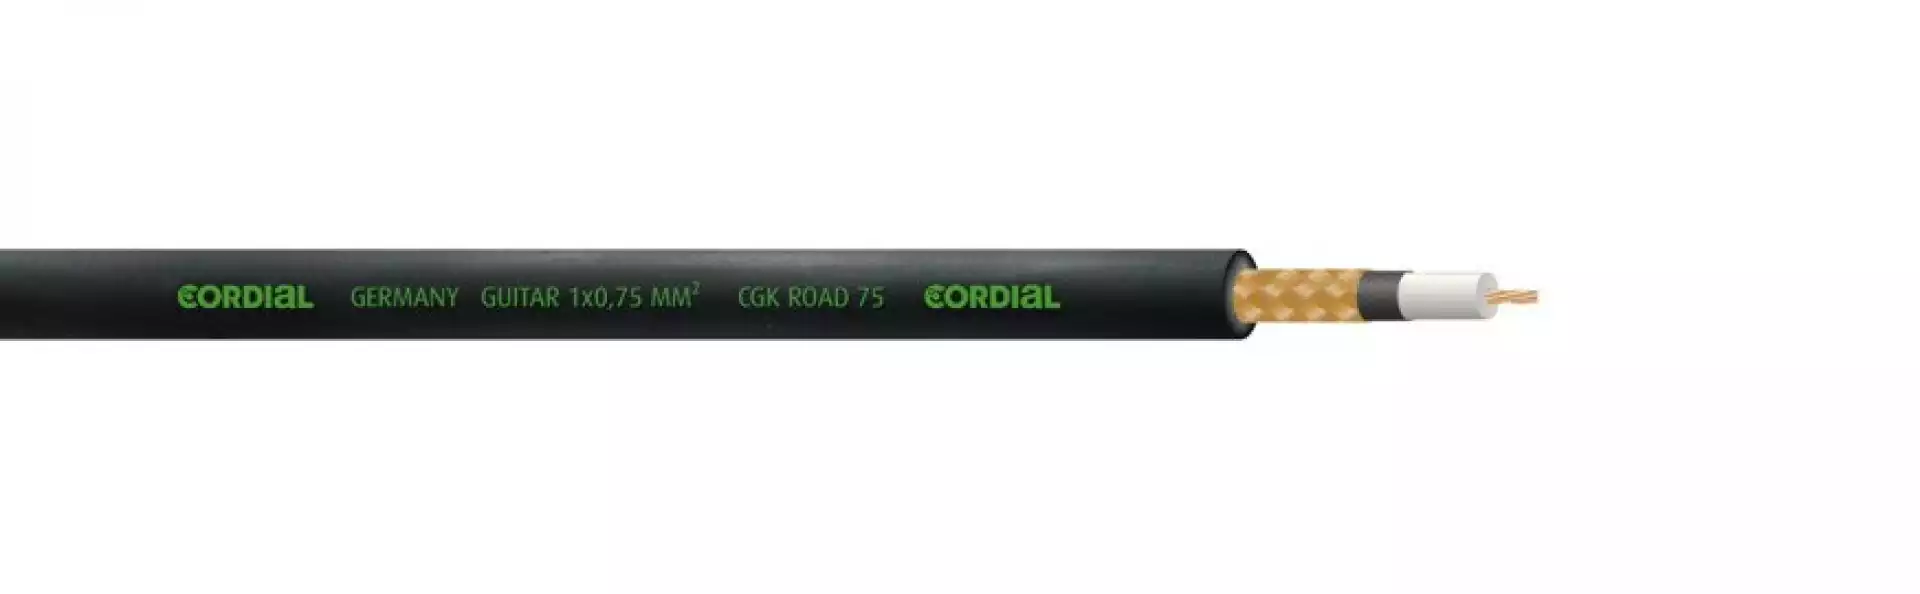 Cordial CGK ROAD 75